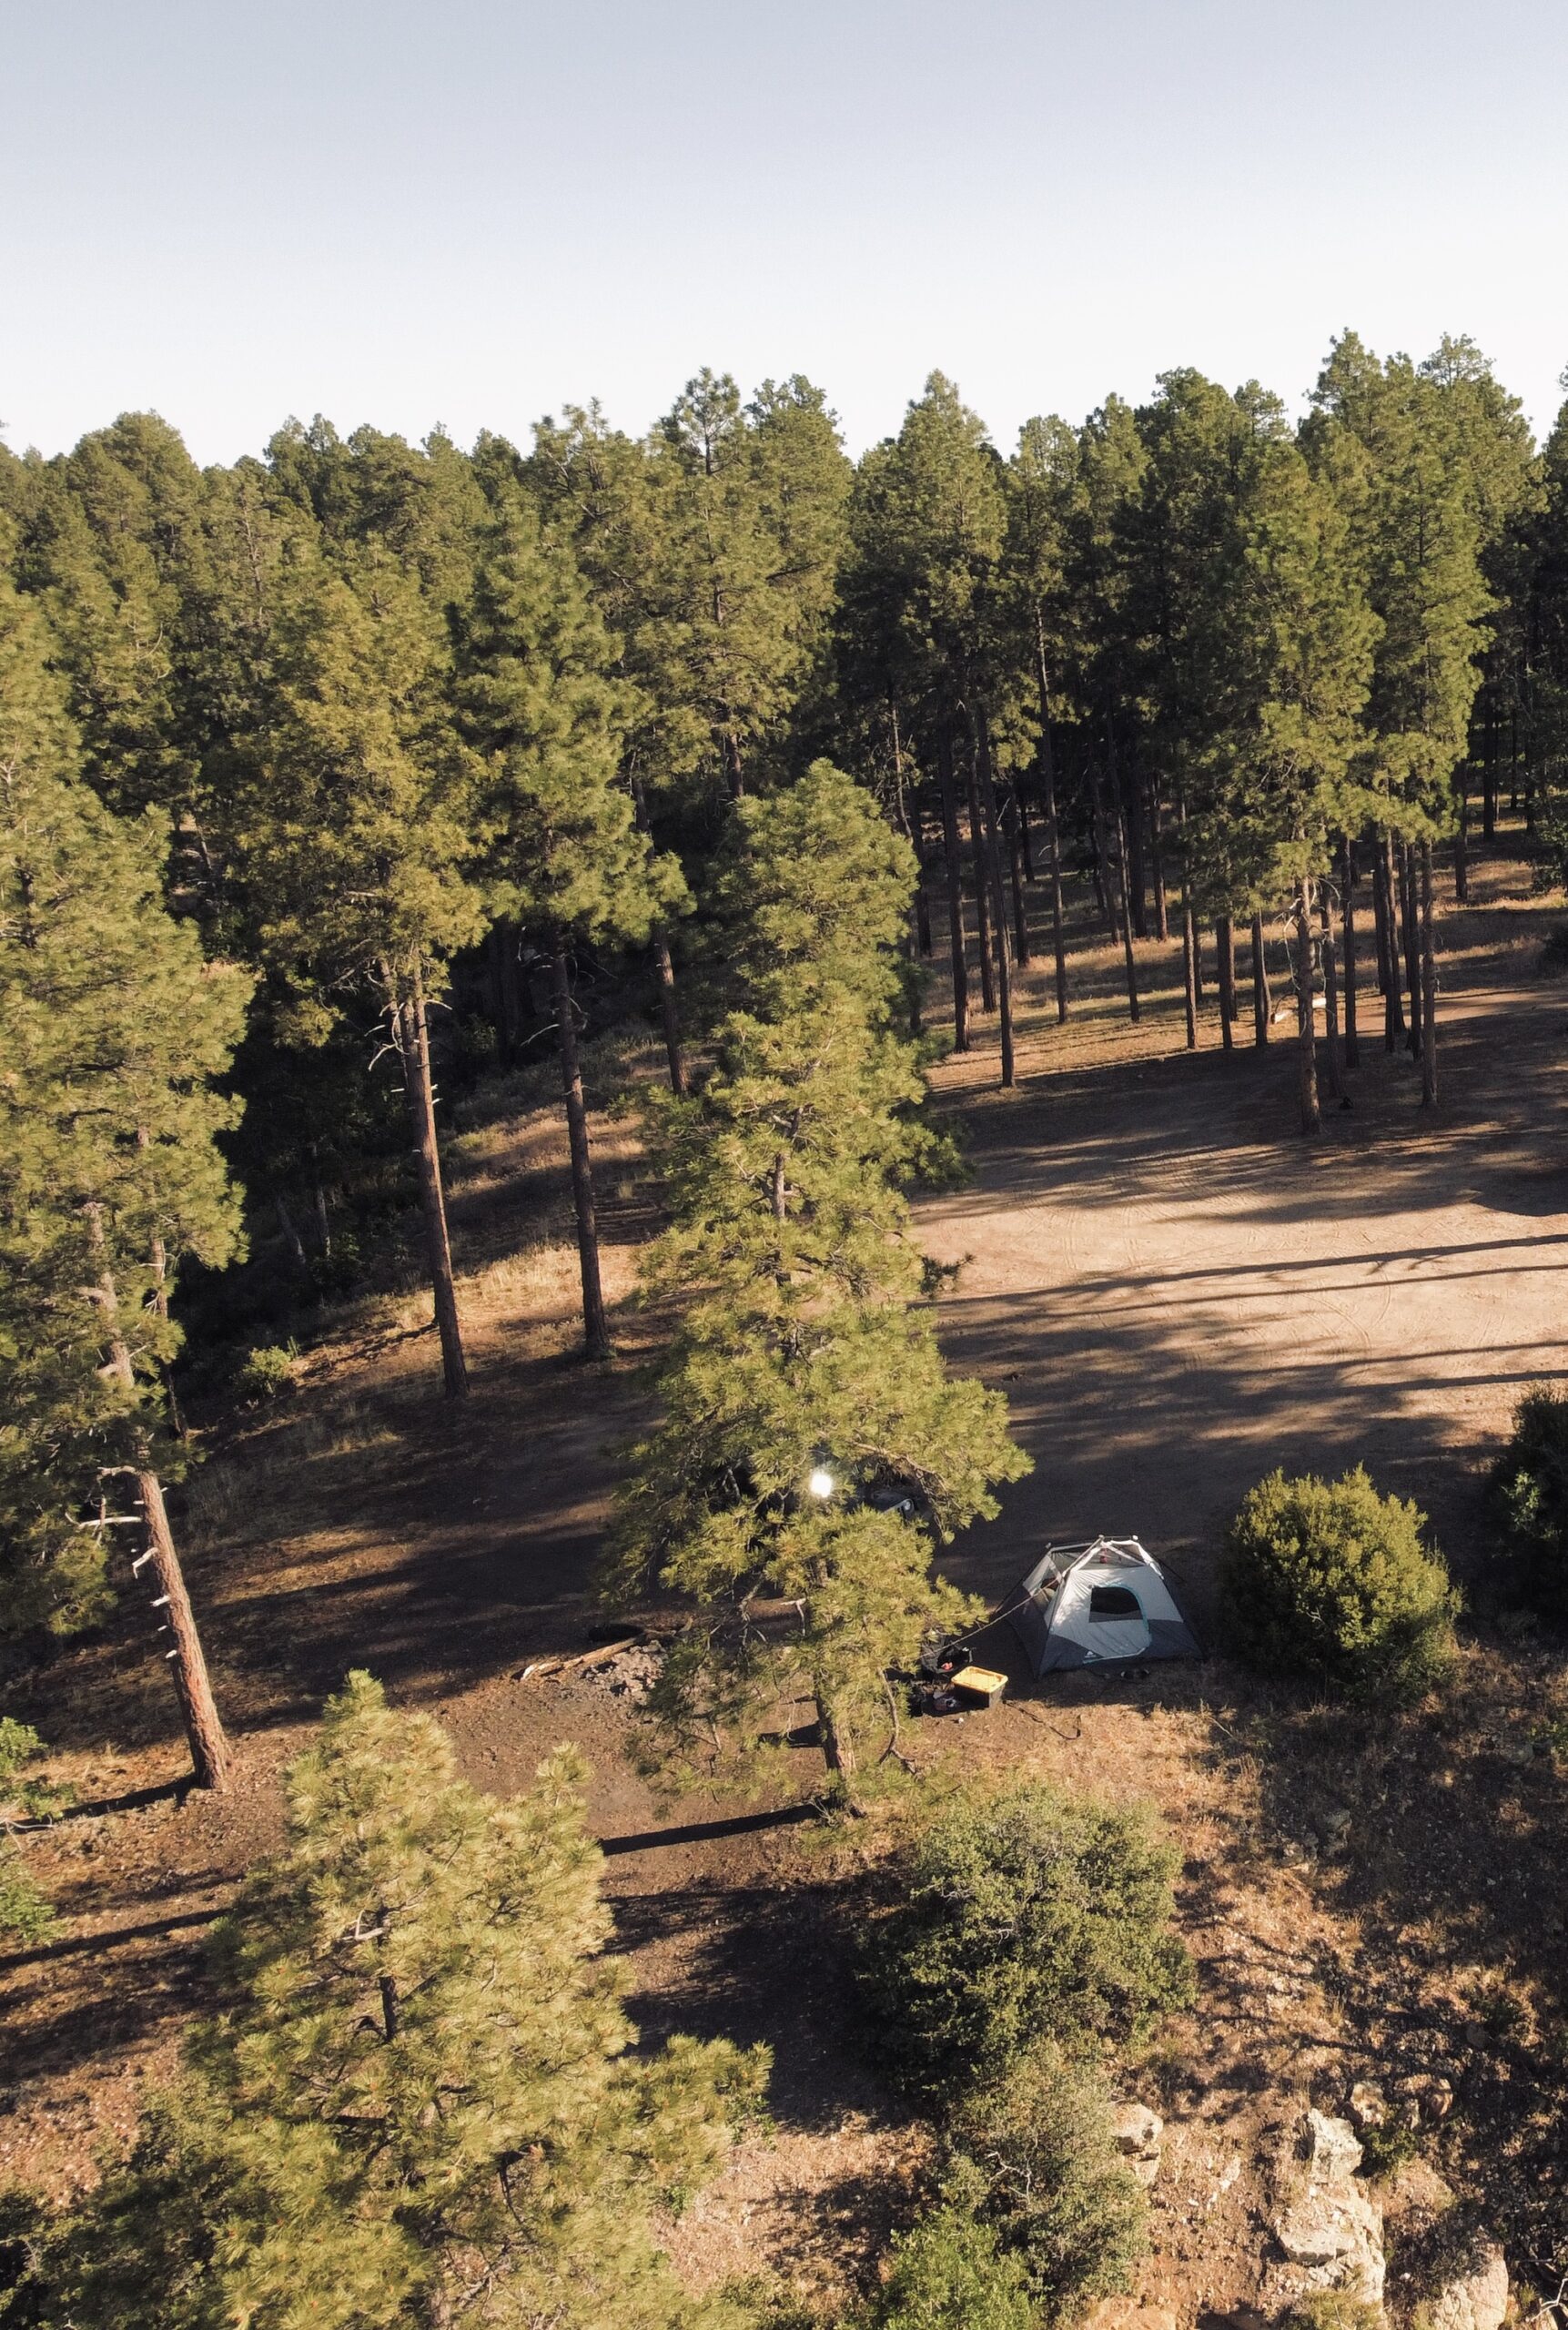 Northern Arizona Camping: My Top 5 Favorite Campsites